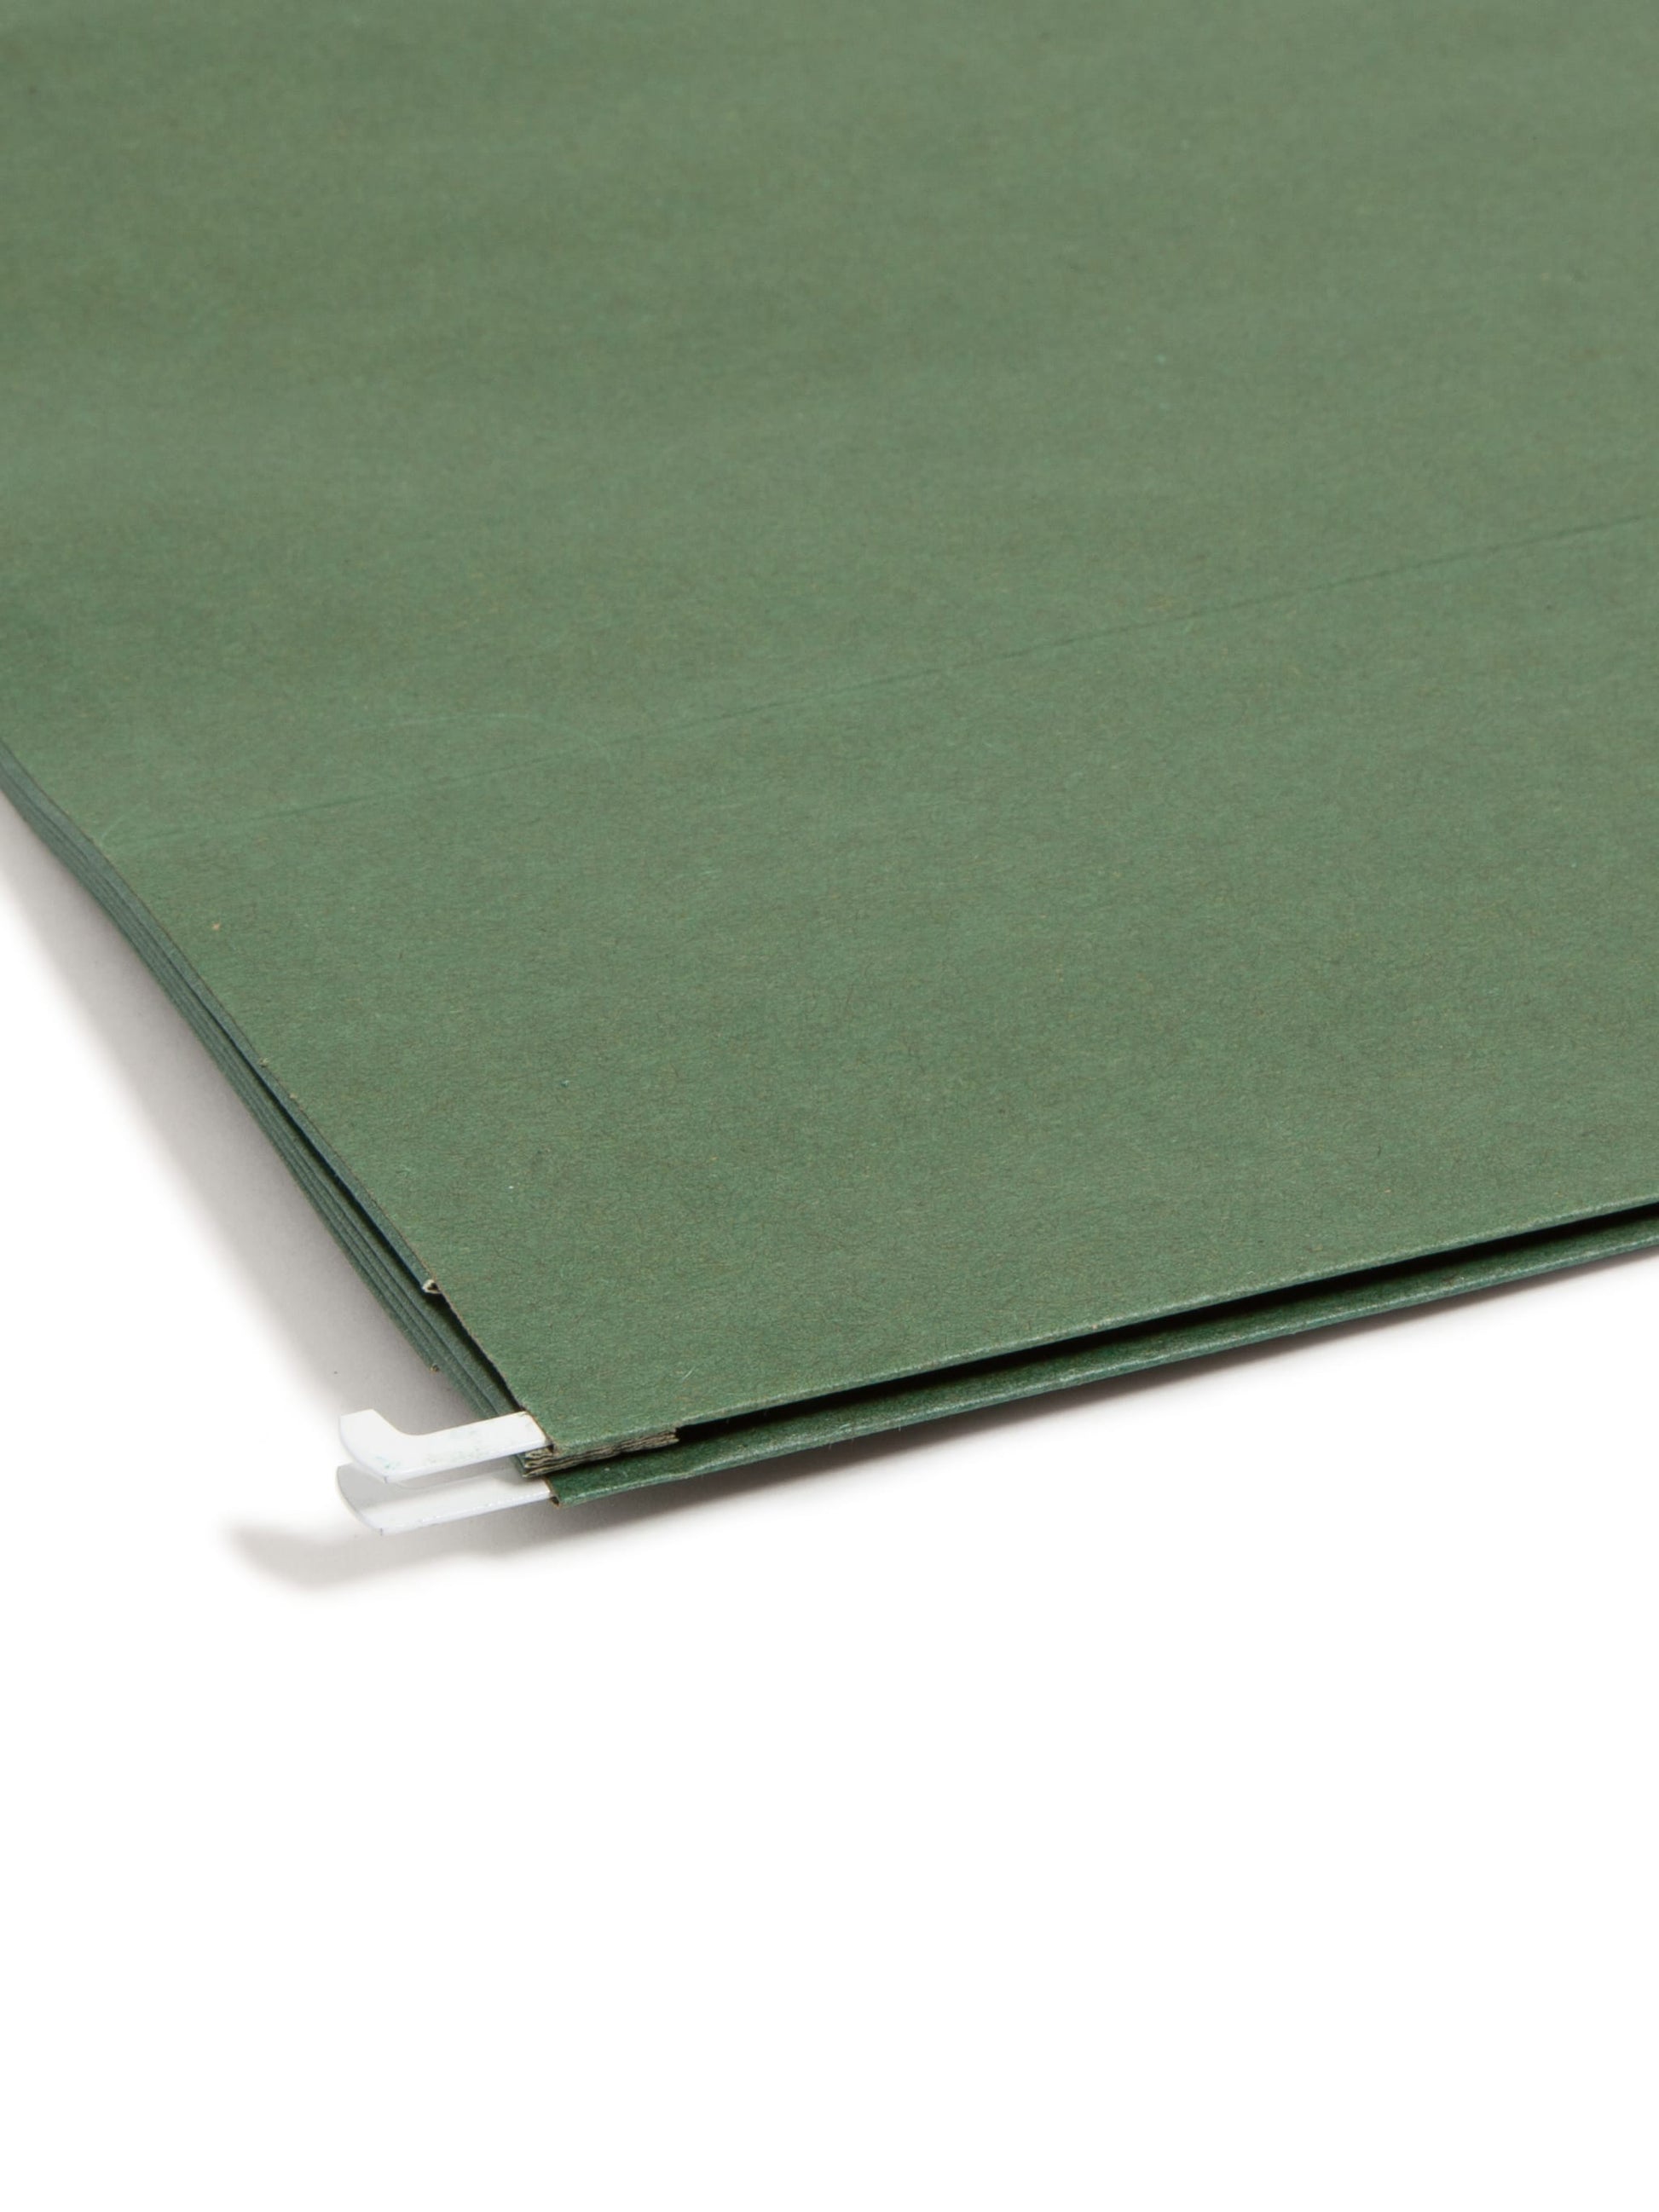 100% Recycled Hanging File Pockets, Standard Green Color, Letter Size, Set of 10, 086486642262